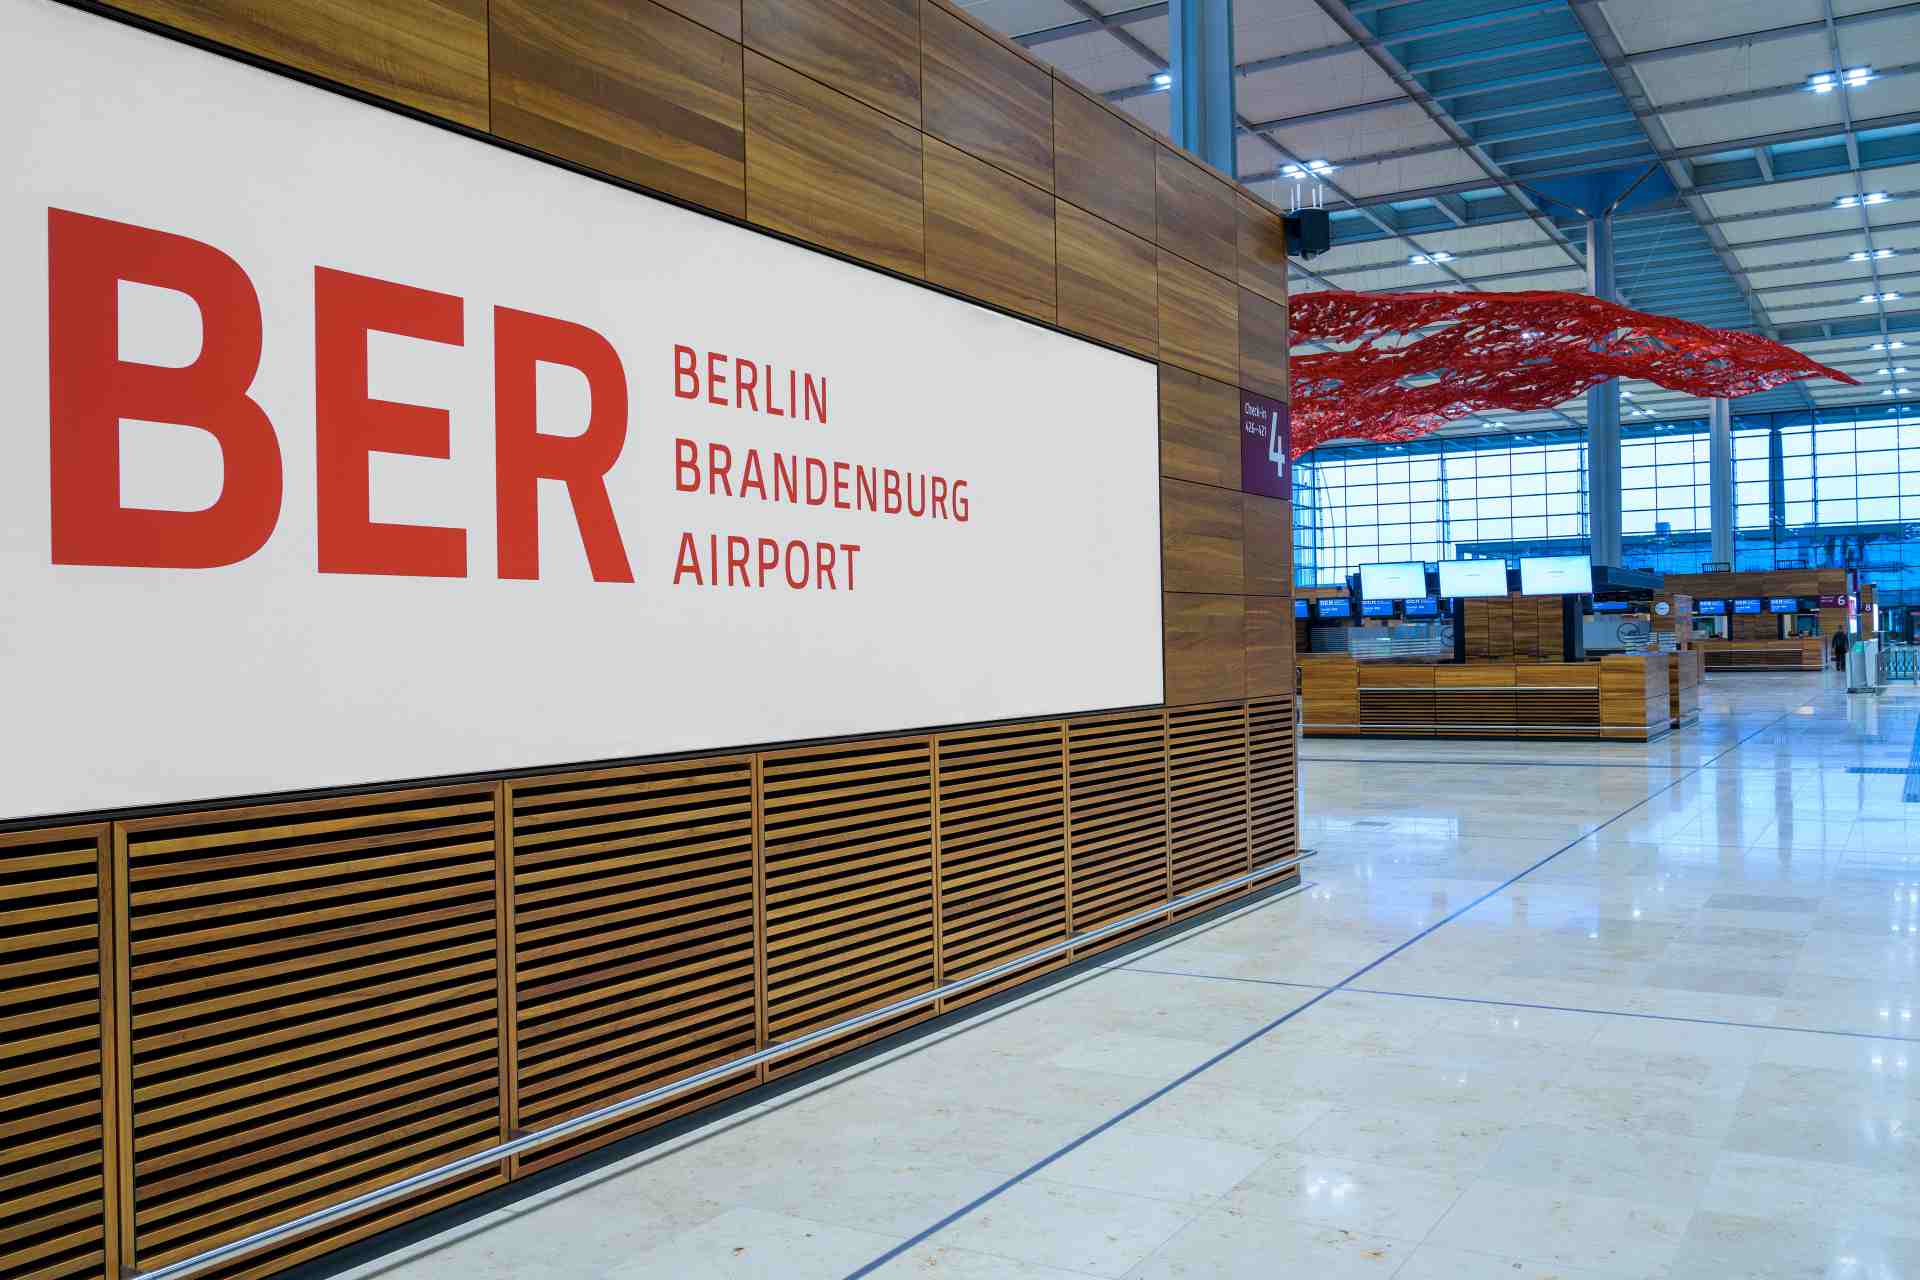 Flughafen Berlin Brandenburg Schriftzug